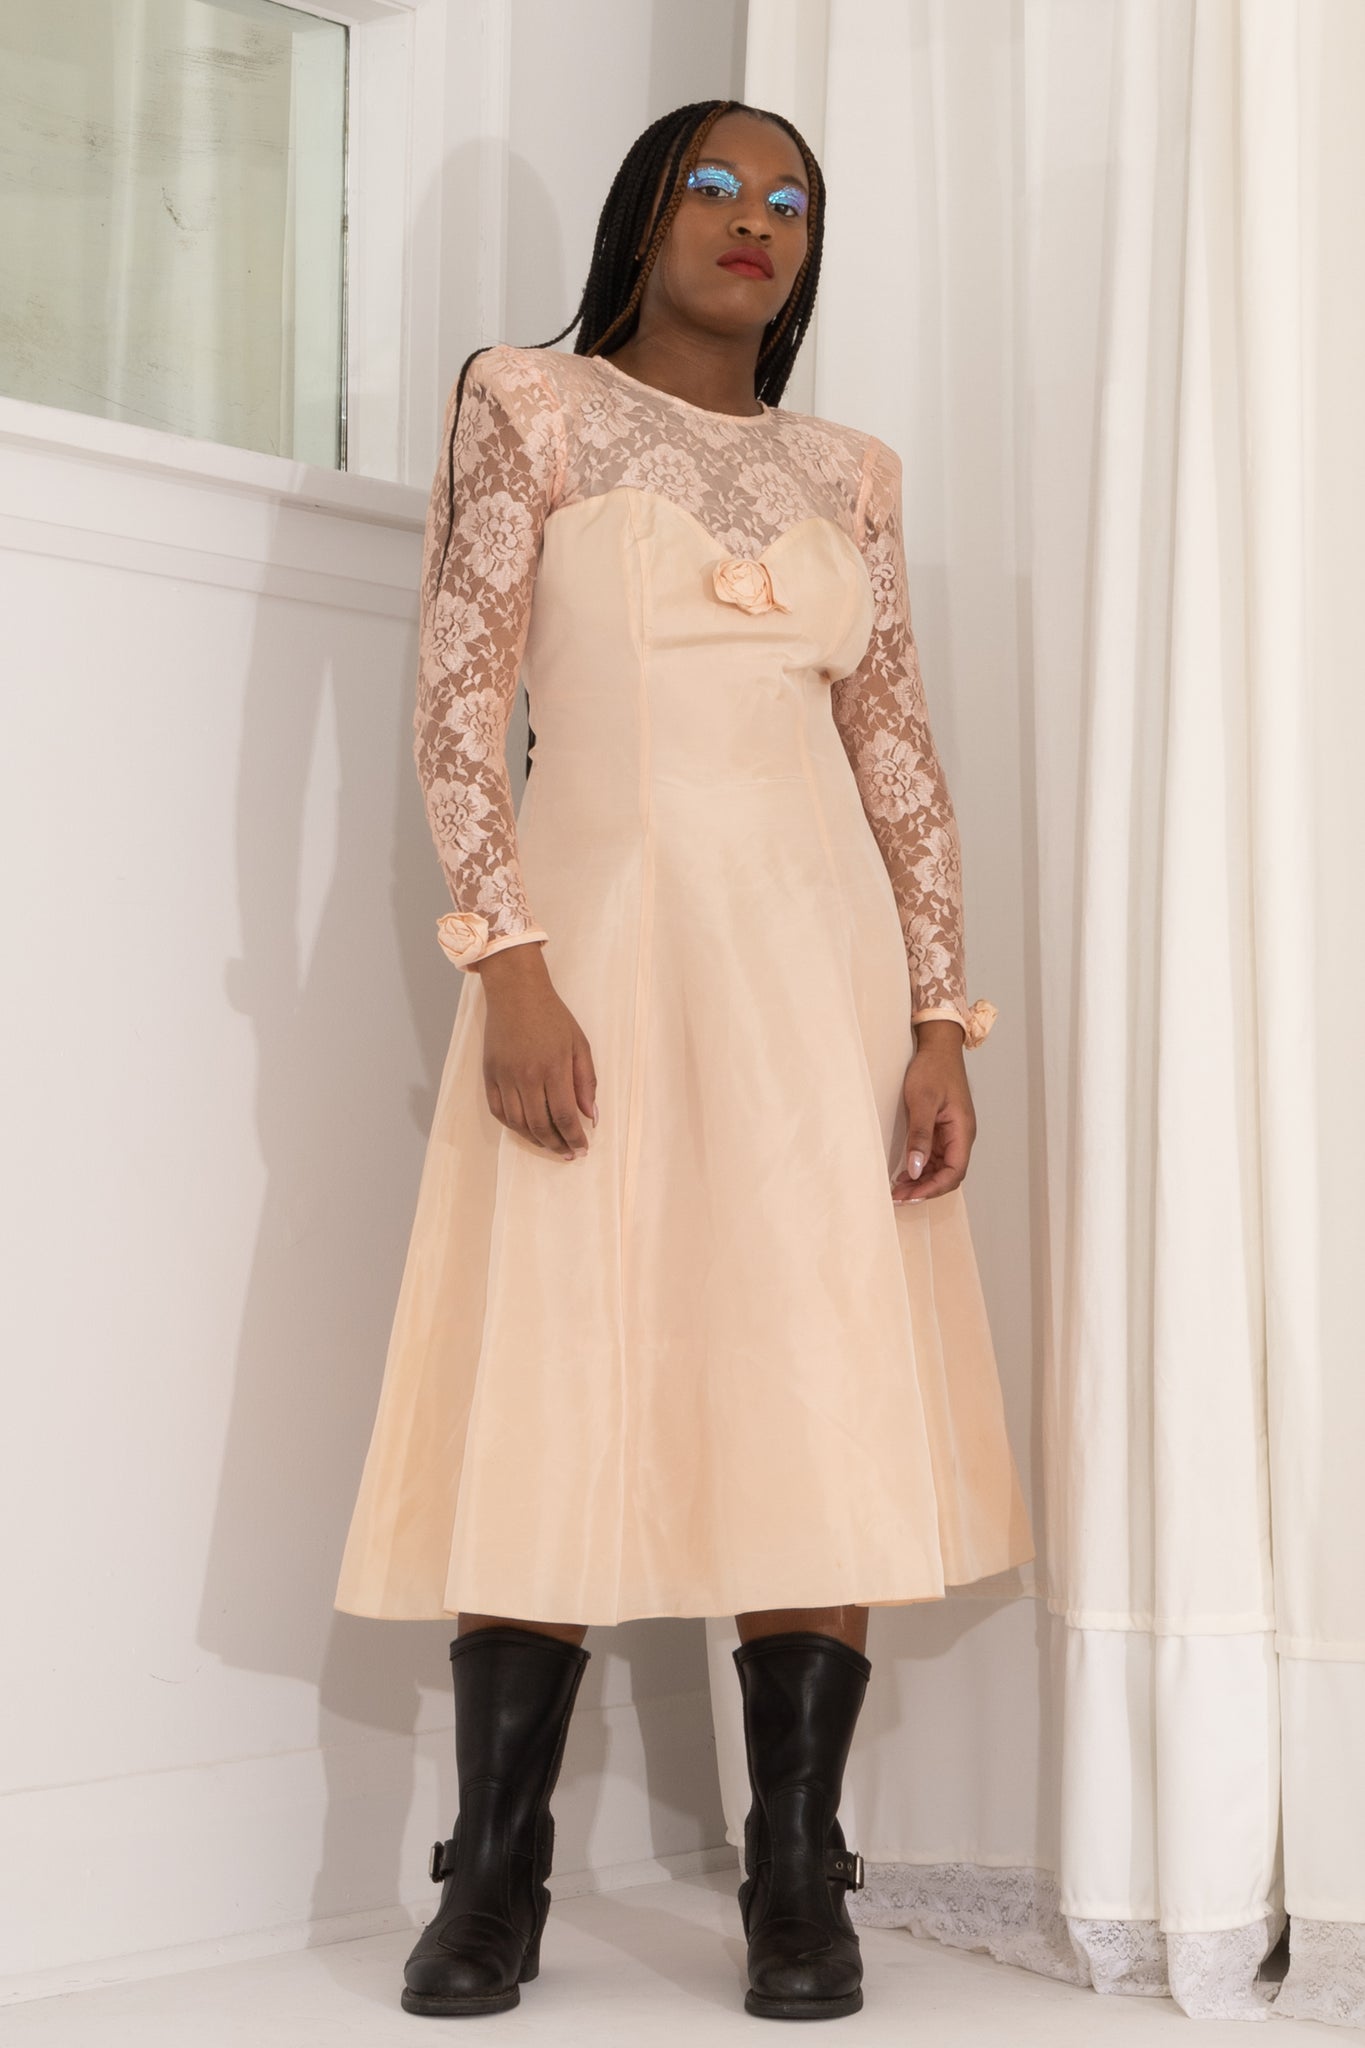 Peach Lace & Rosette Sweetheart Dress (M)